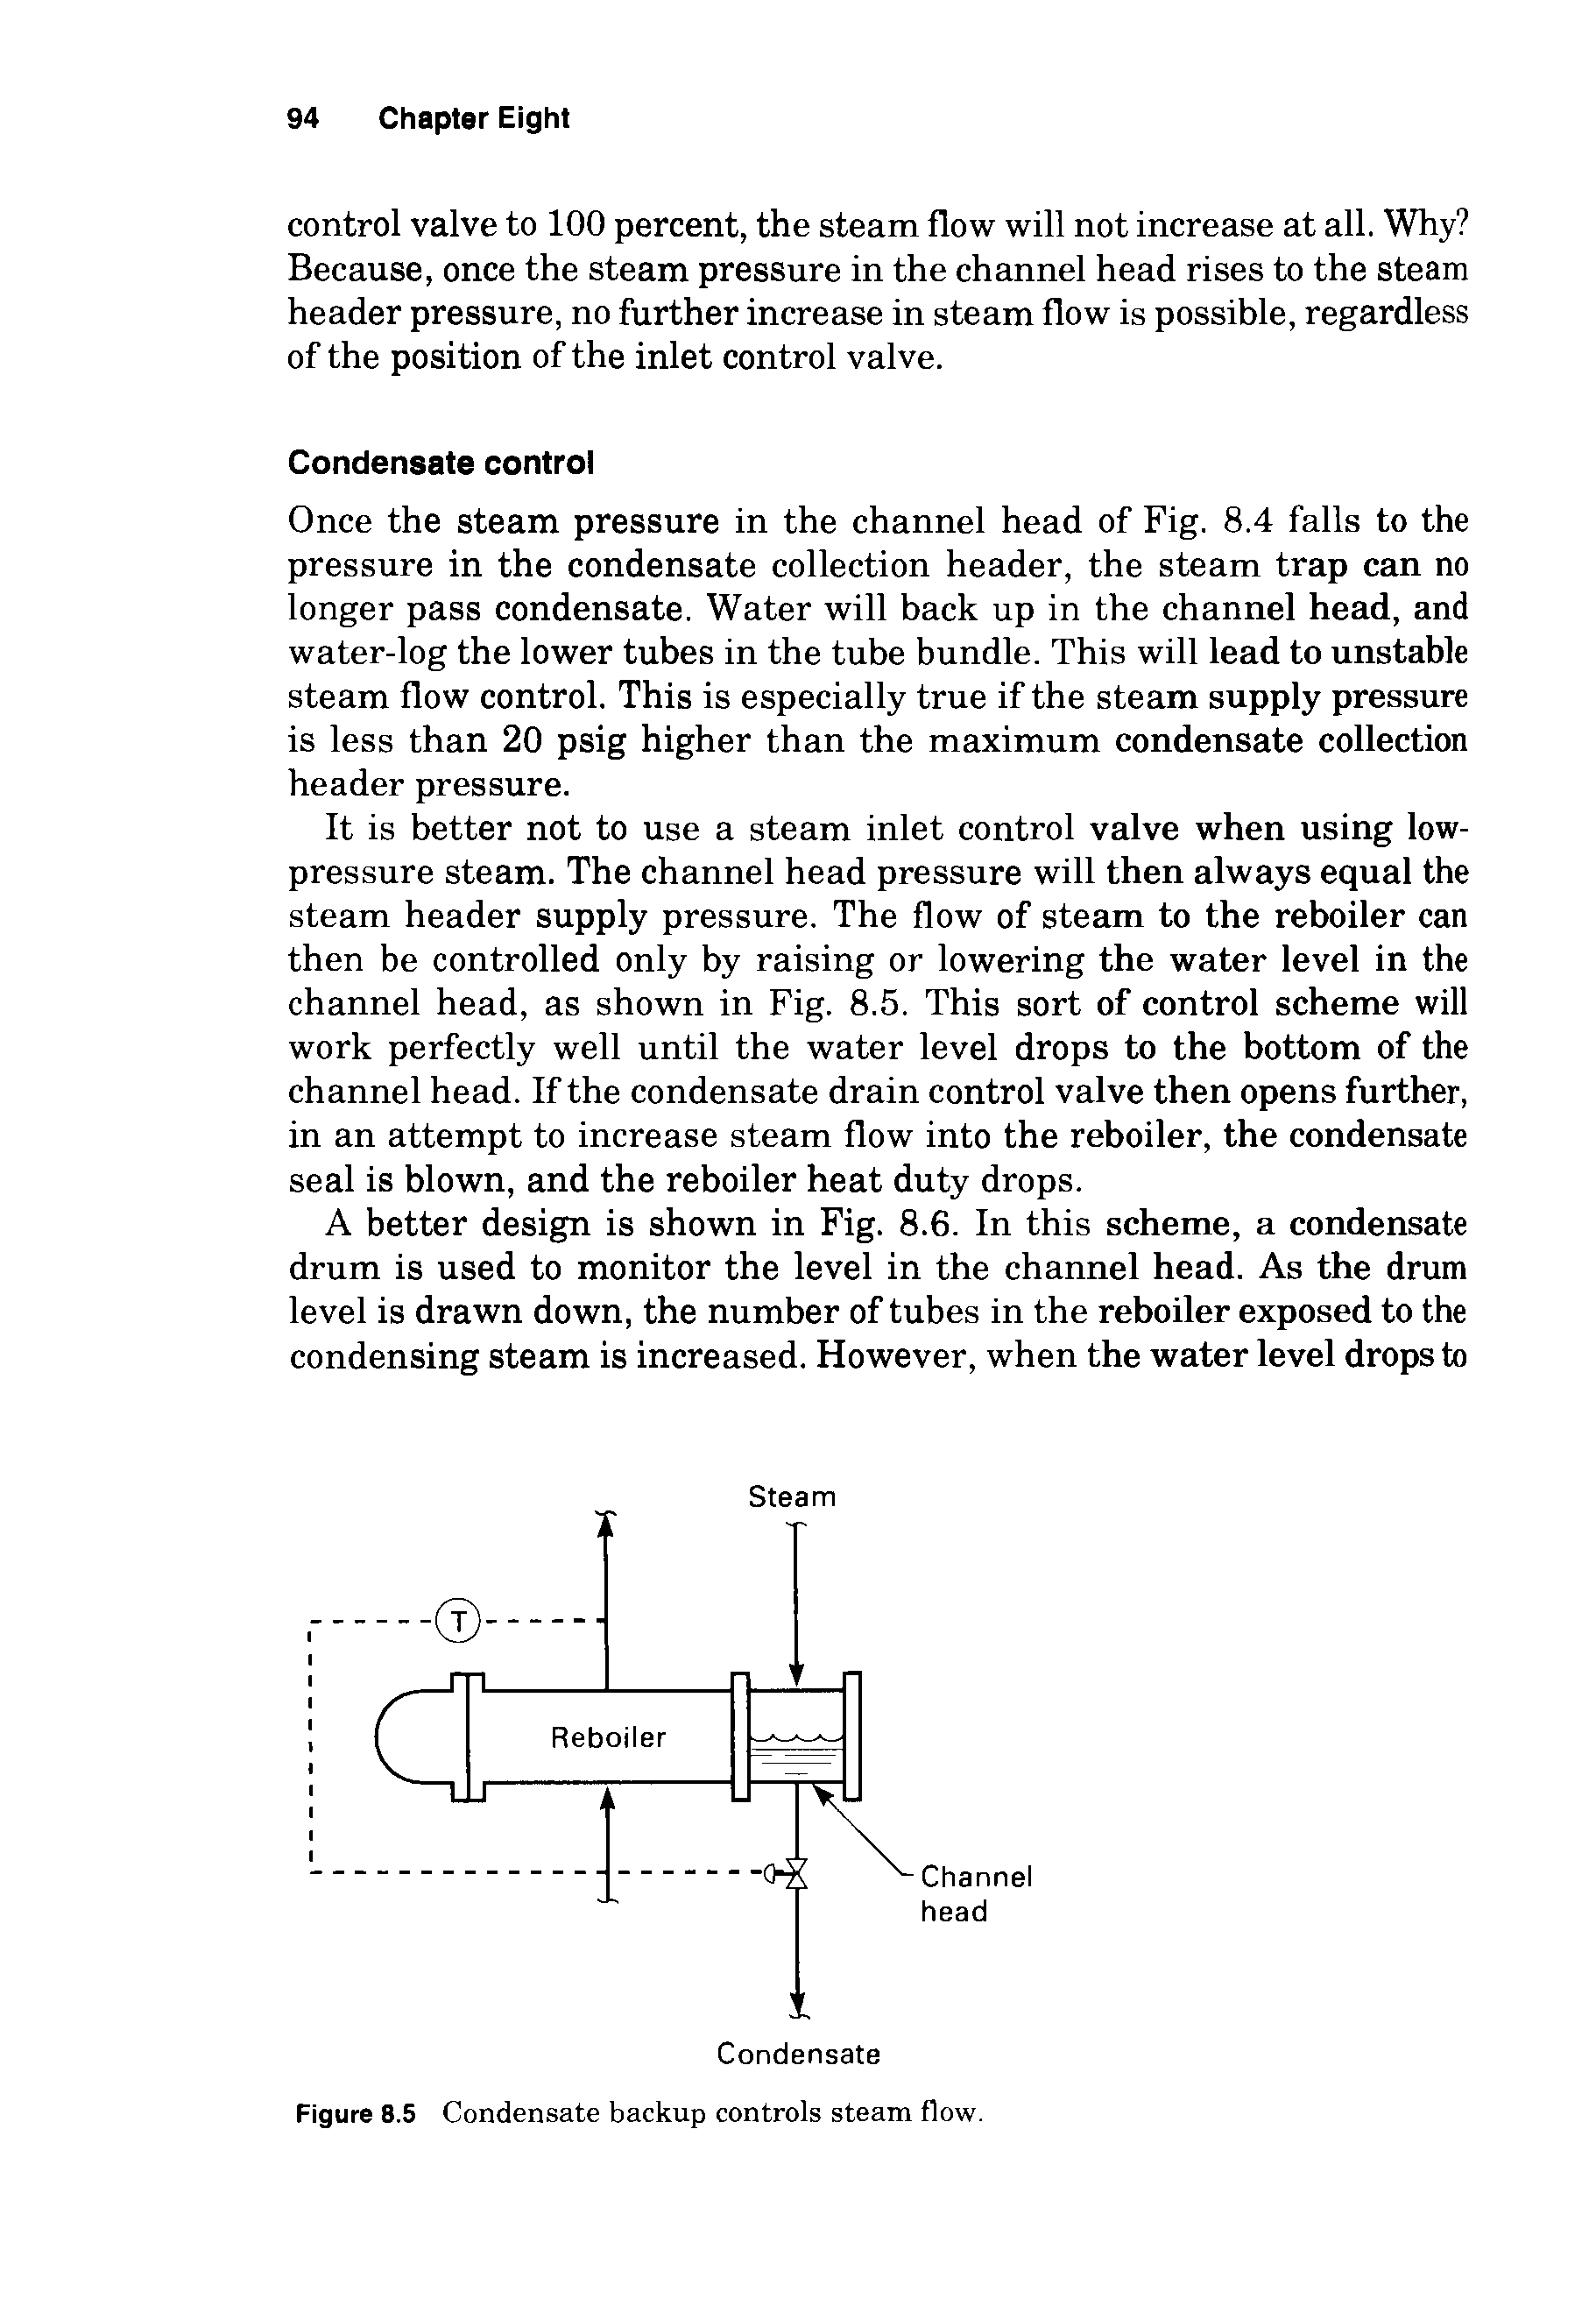 Figure 8.5 Condensate backup controls steam flow.